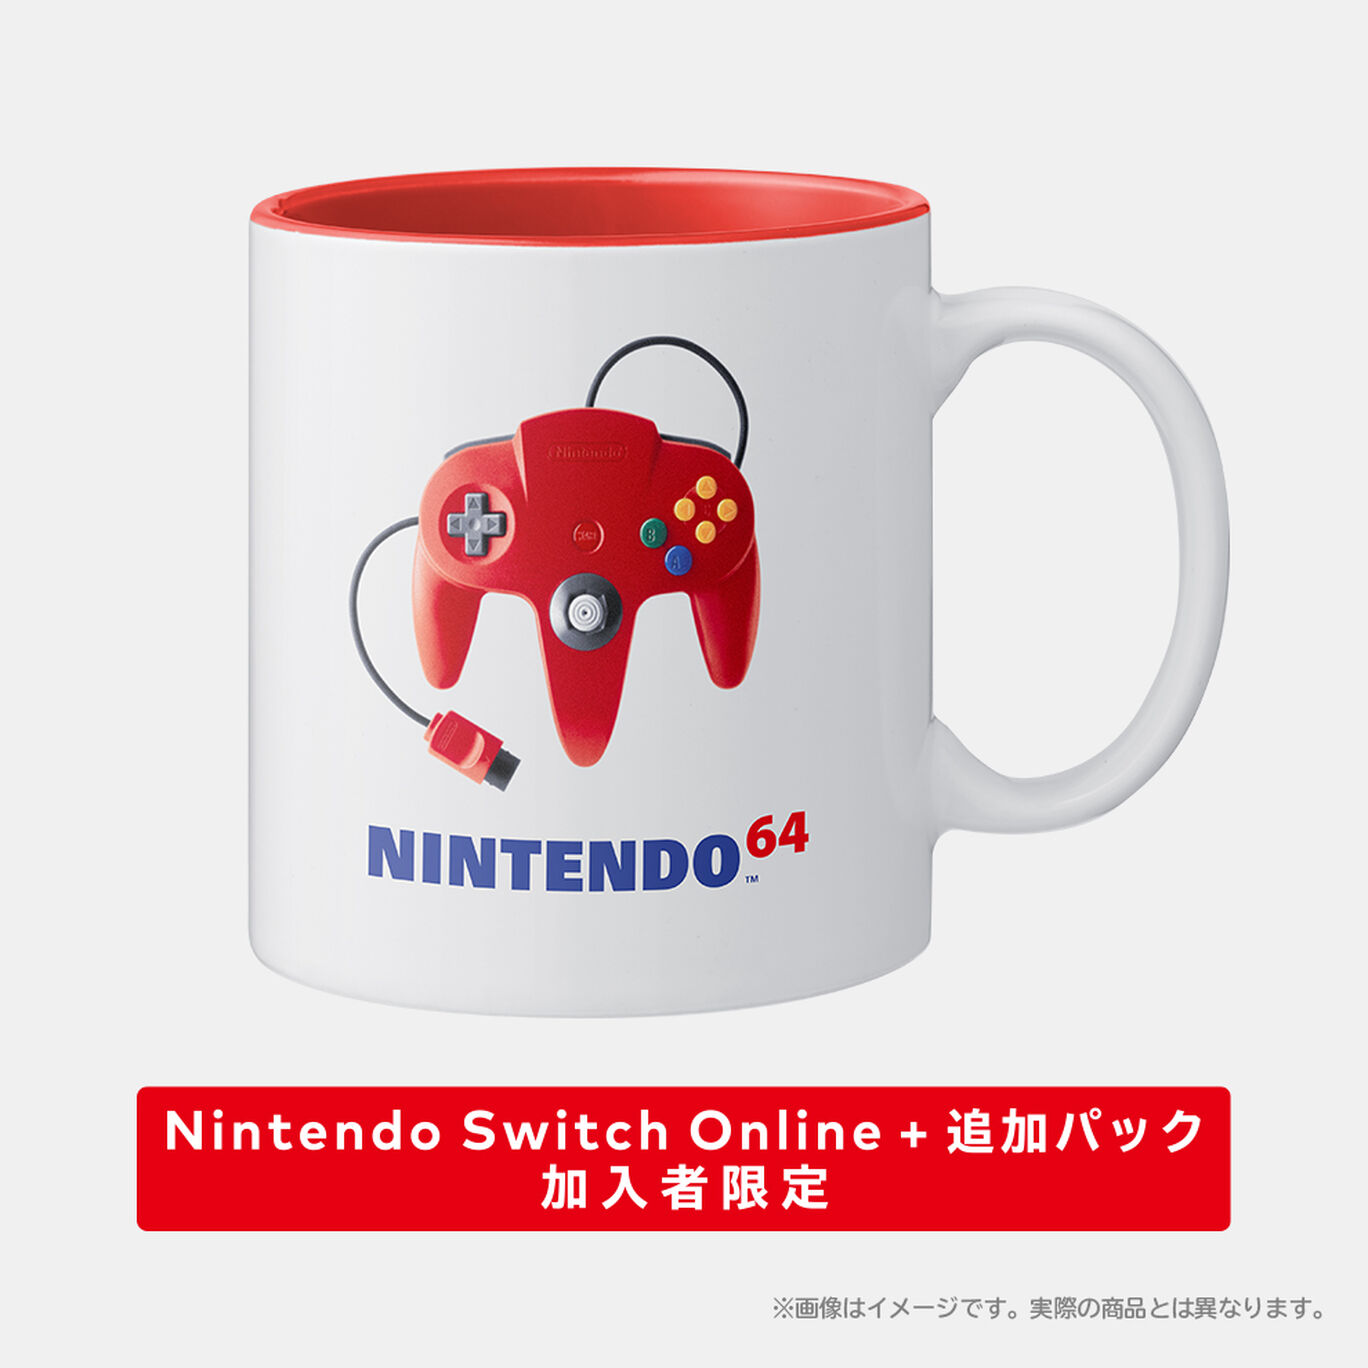 Nintendo Switch Online ＋ 追加パック加入者限定 マグカップ NINTENDO 64 コントローラ ブロス レッド